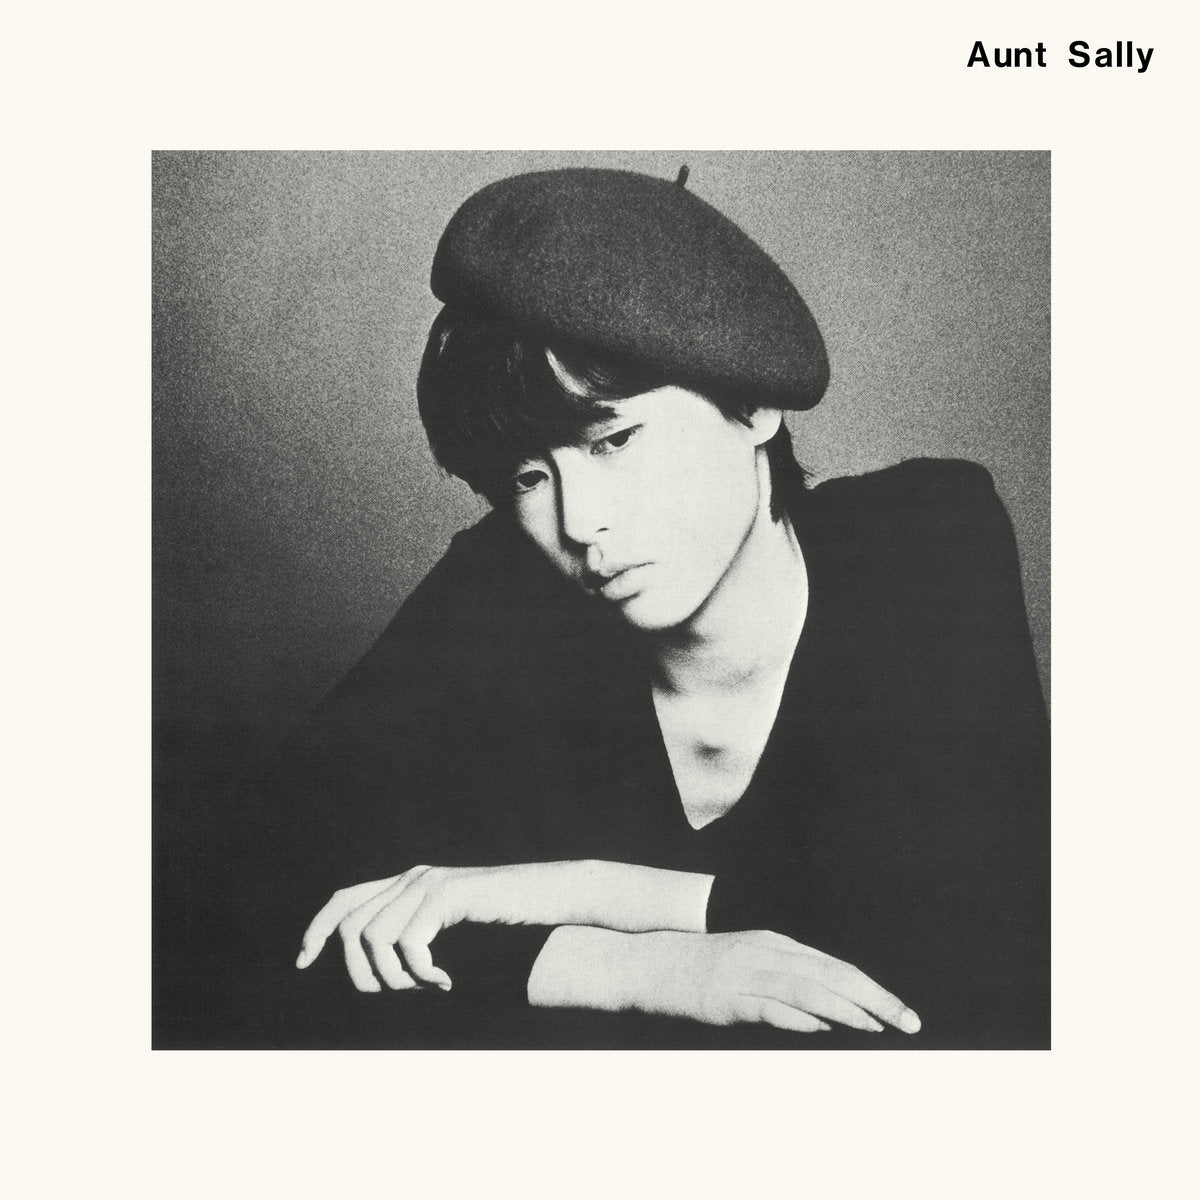 AUNT SALLY - AUNT SALLY Vinyl LP